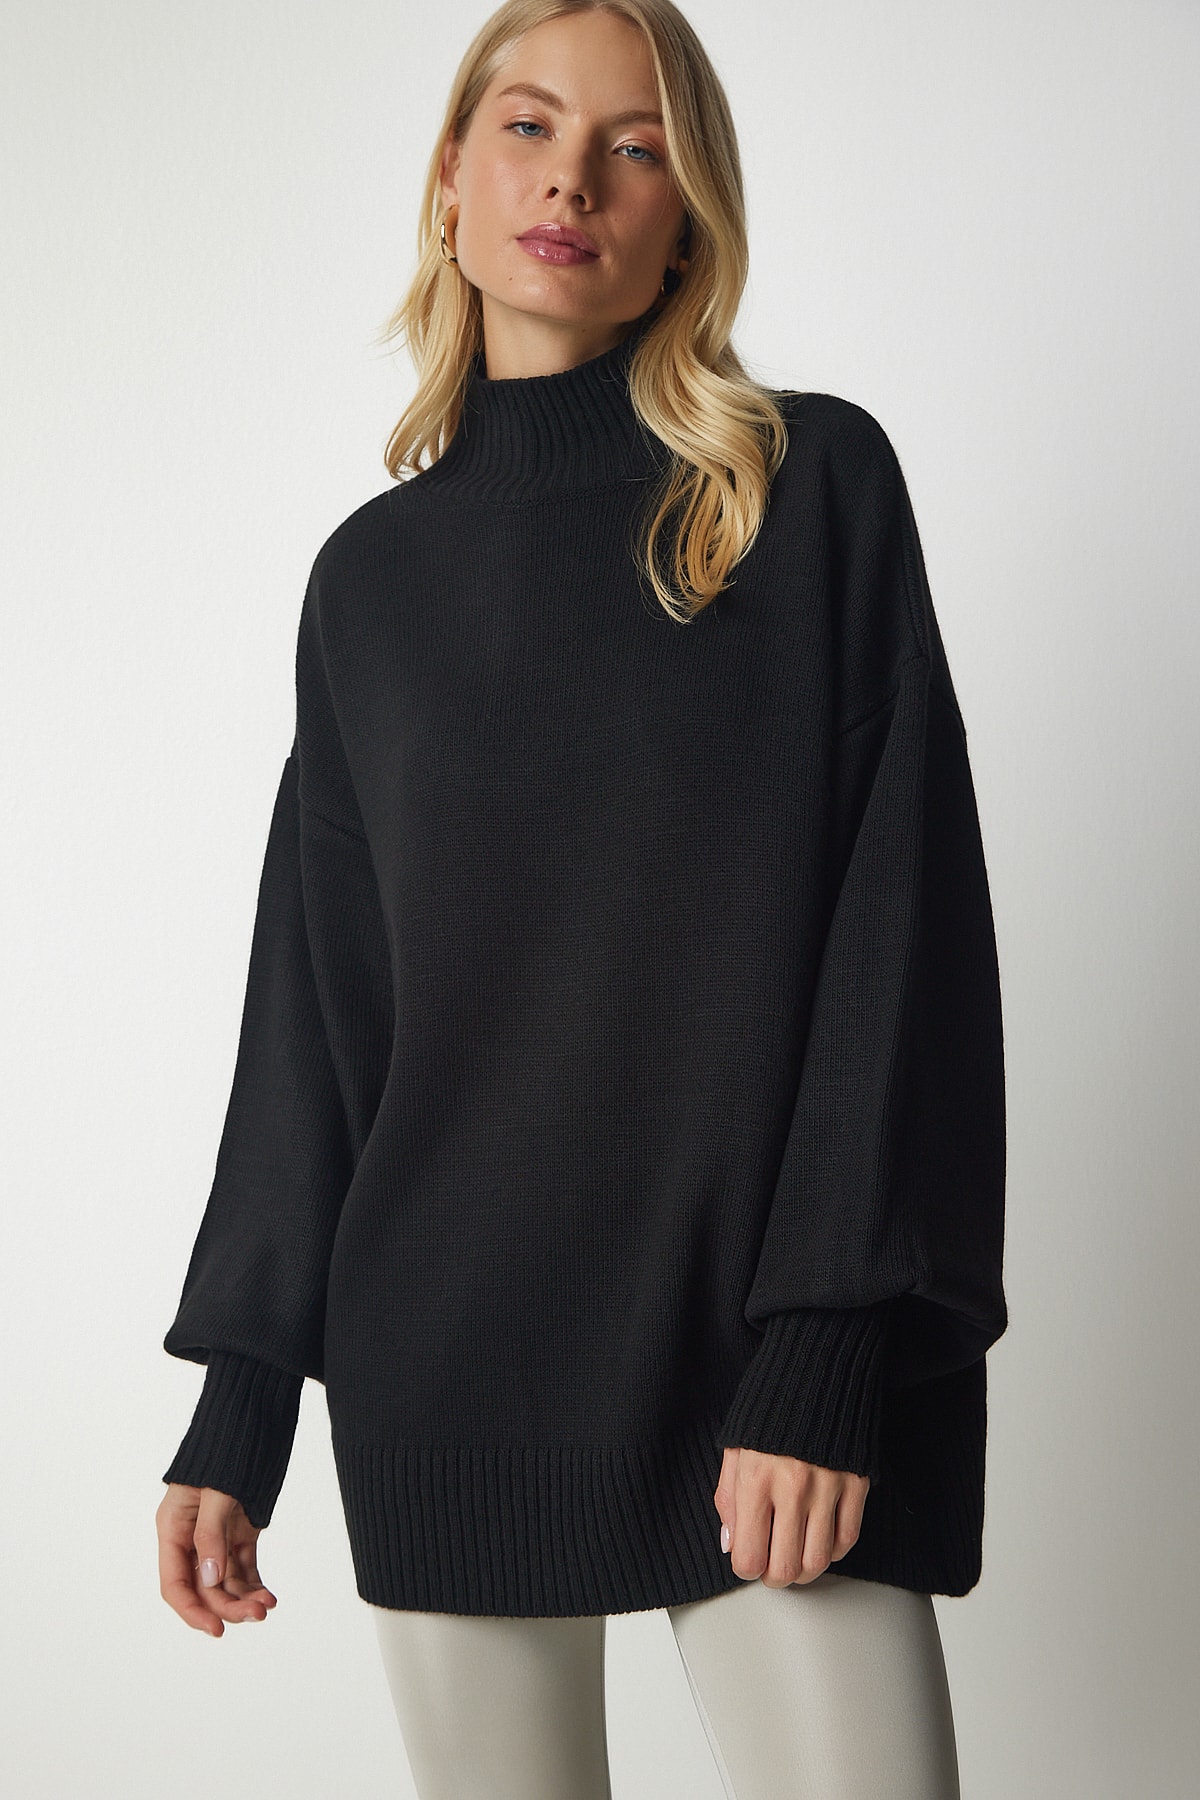 Levně Happiness İstanbul Women's Black High Neck Oversize Basic Knitwear Sweater